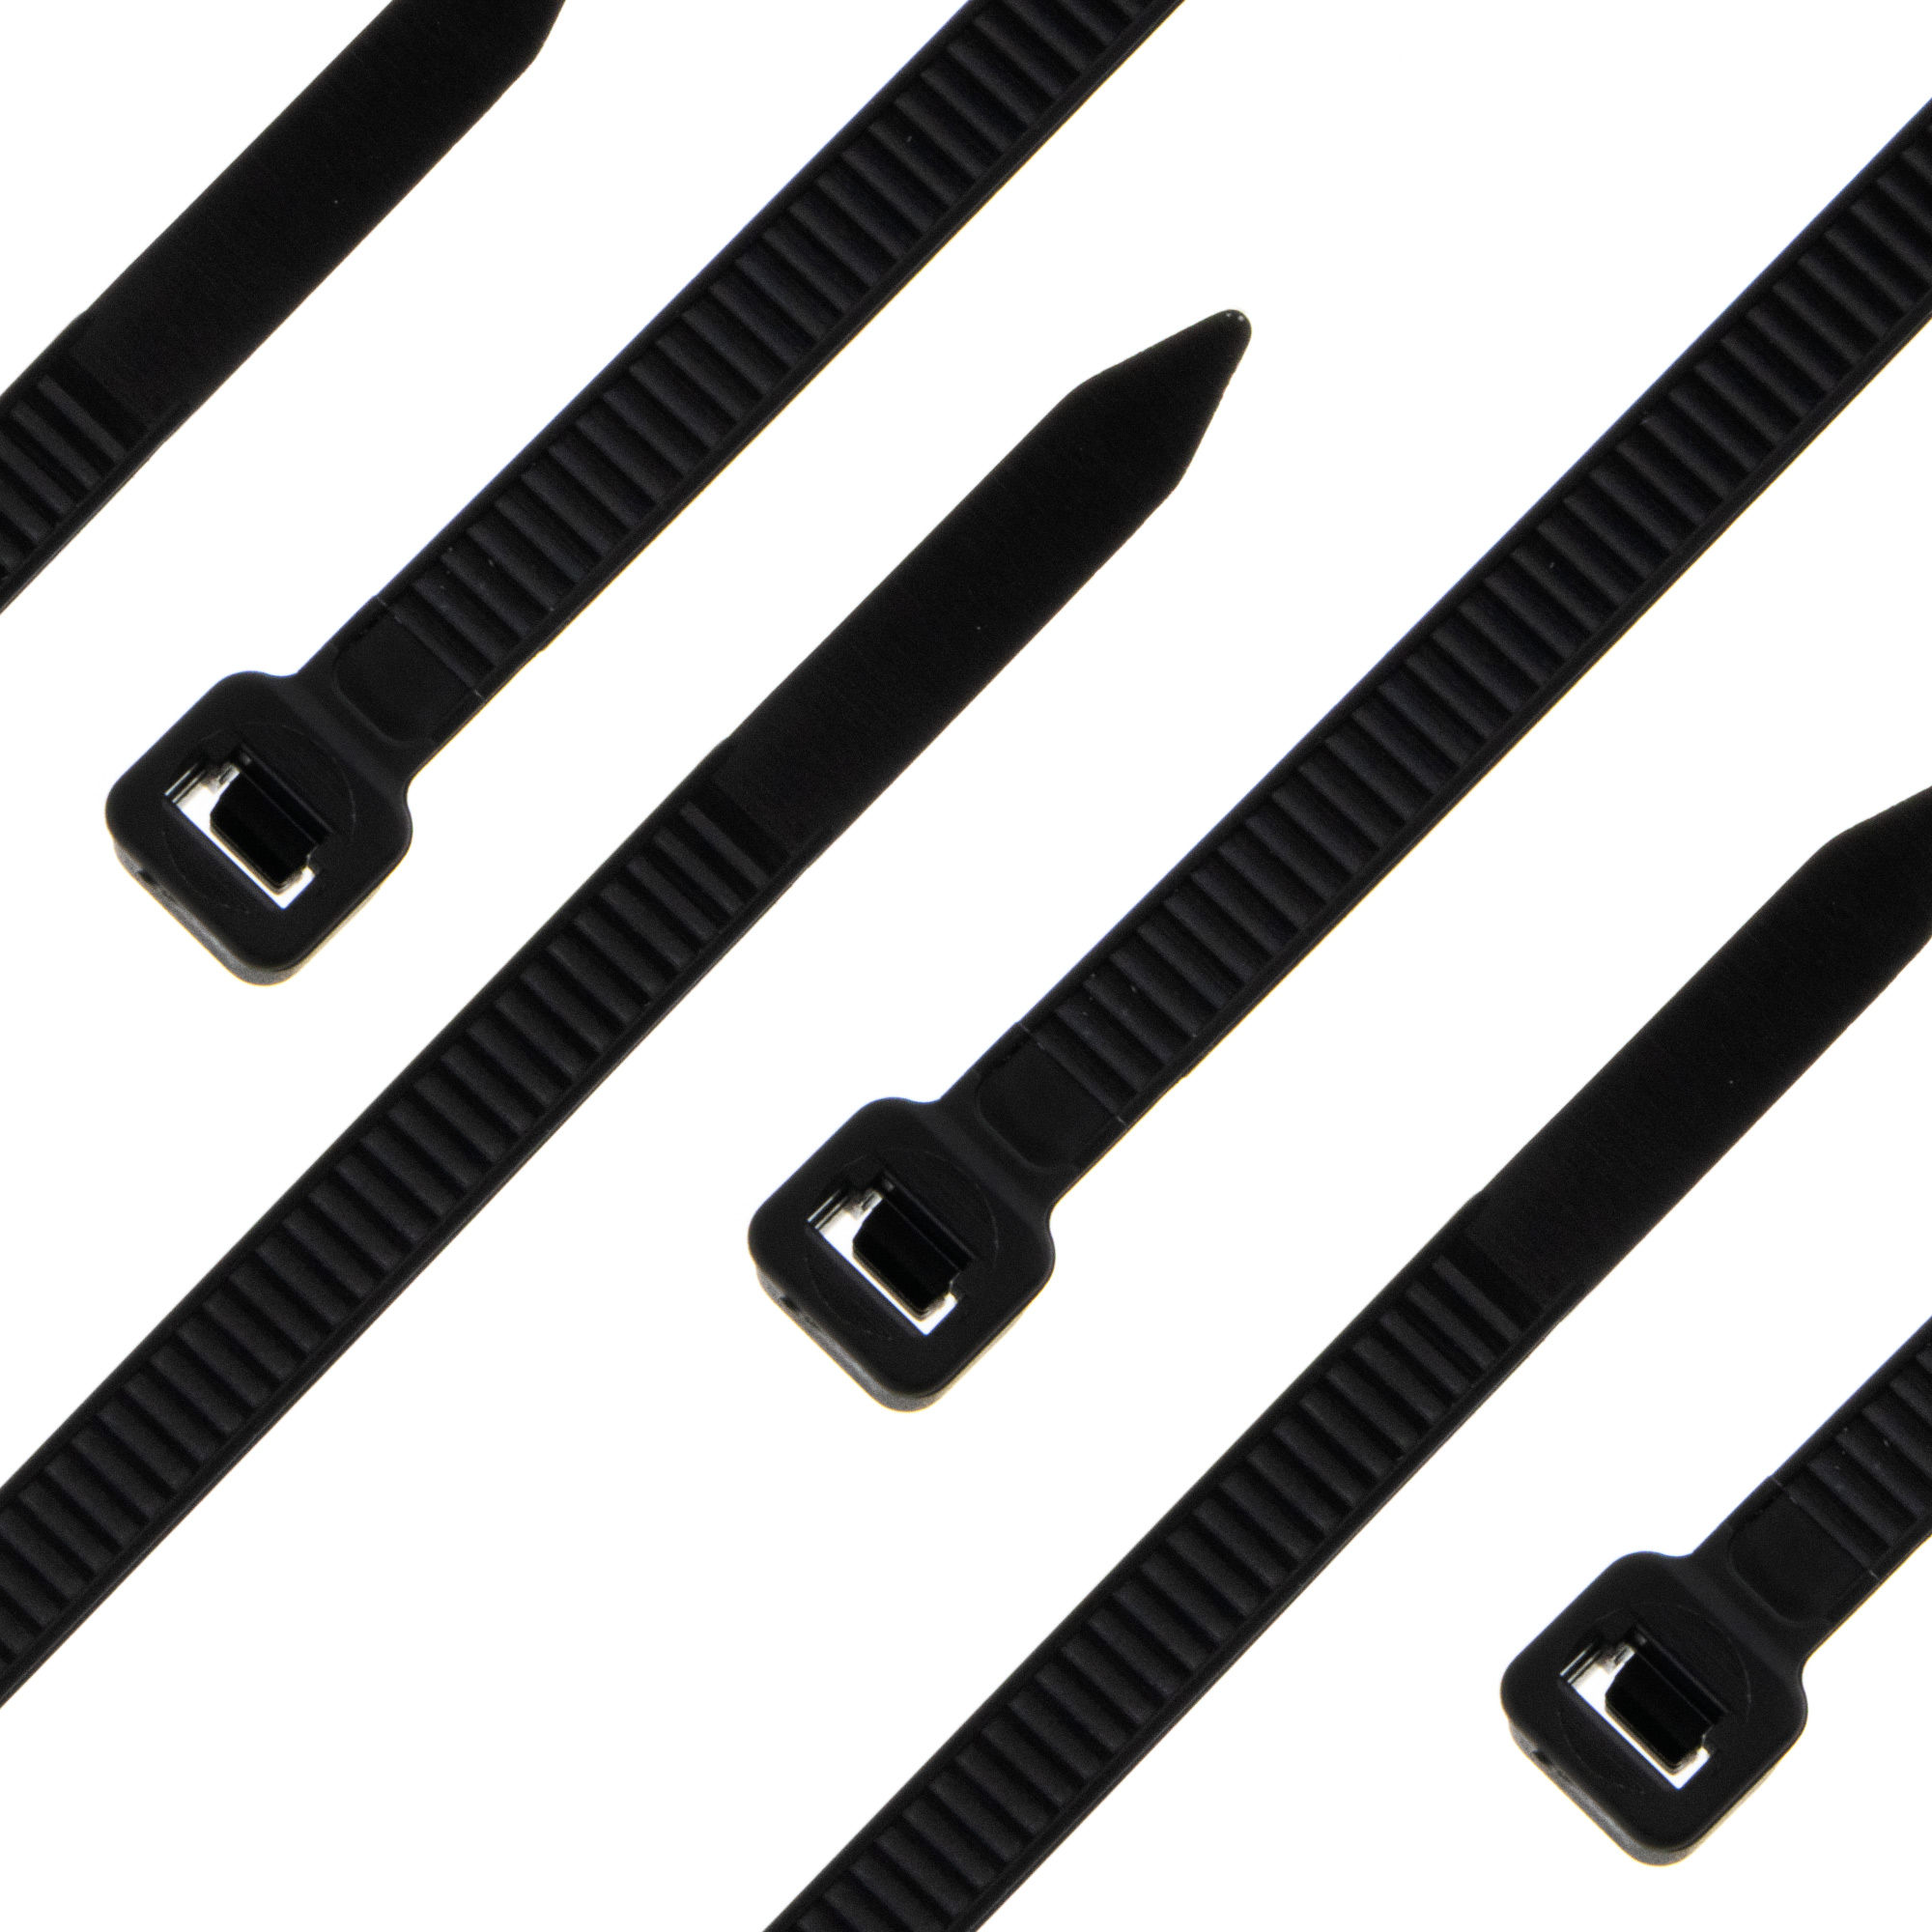 Cable tie self-locking 200 x 3,6mm, black, 100PCS